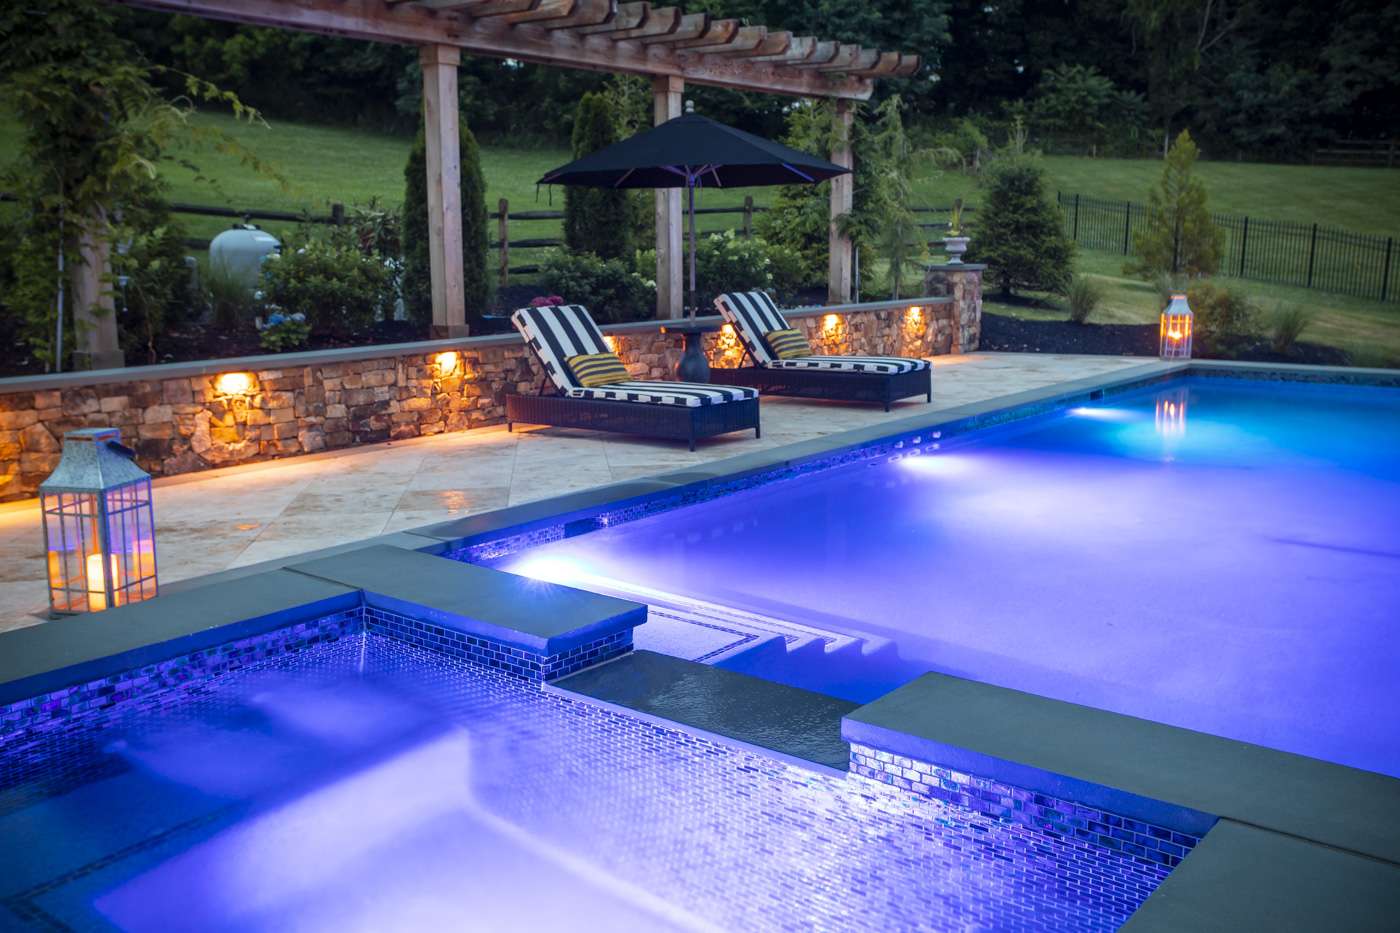 Swimming pool with lighting